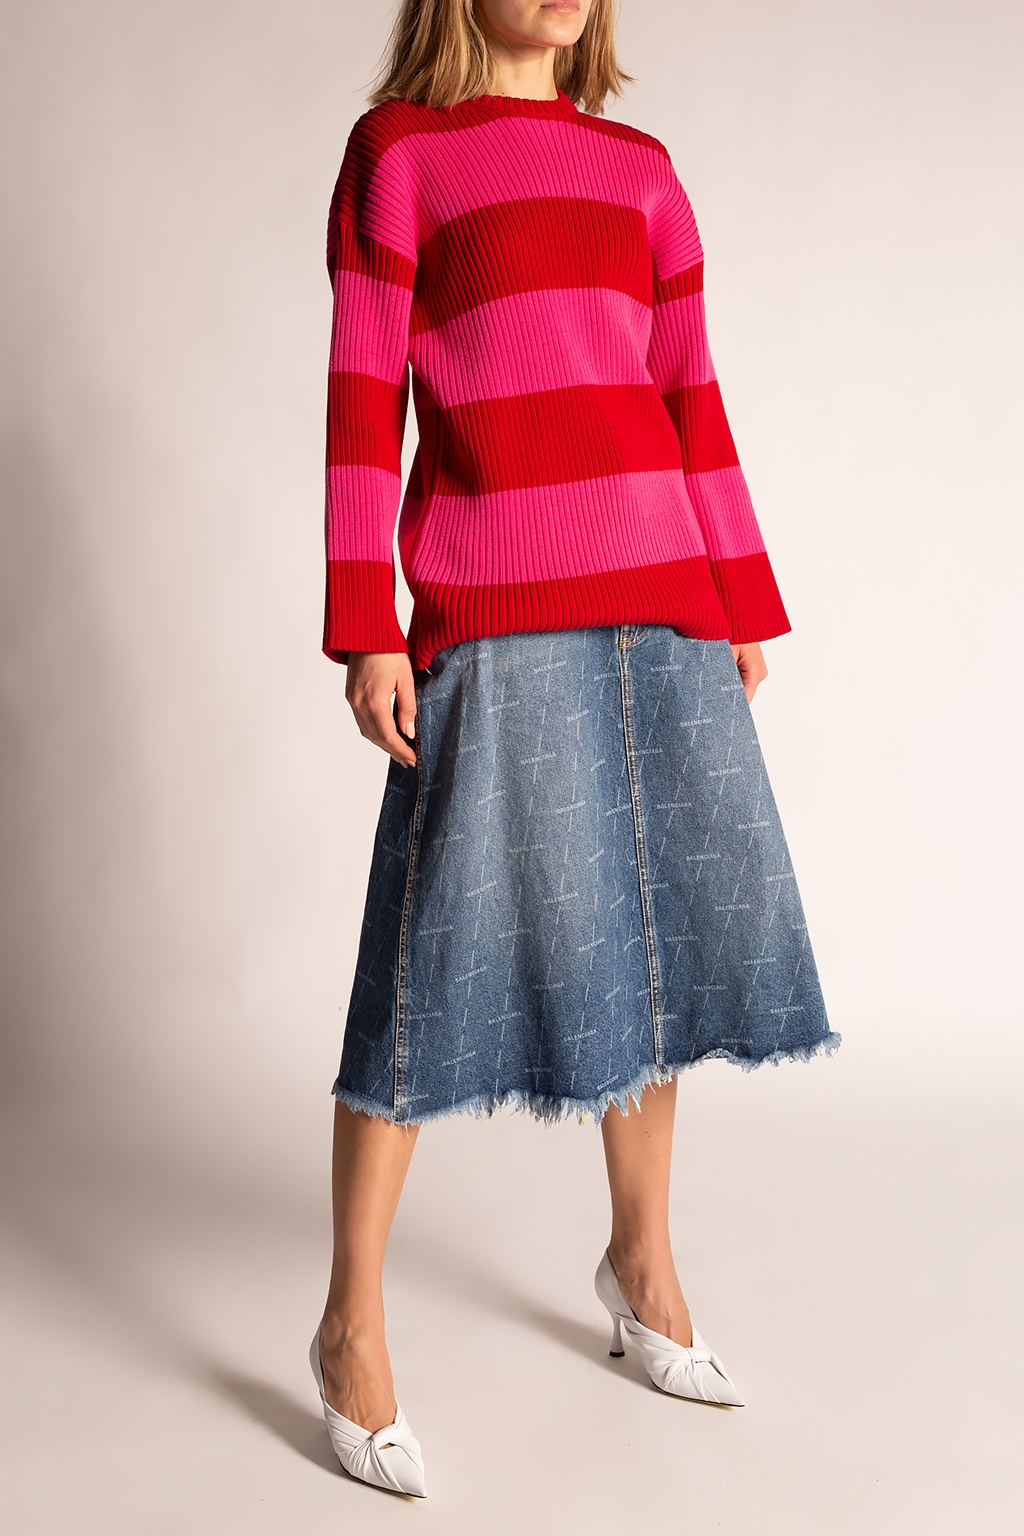 Balenciaga Denim skirt with logo | Women's Clothing | Vitkac